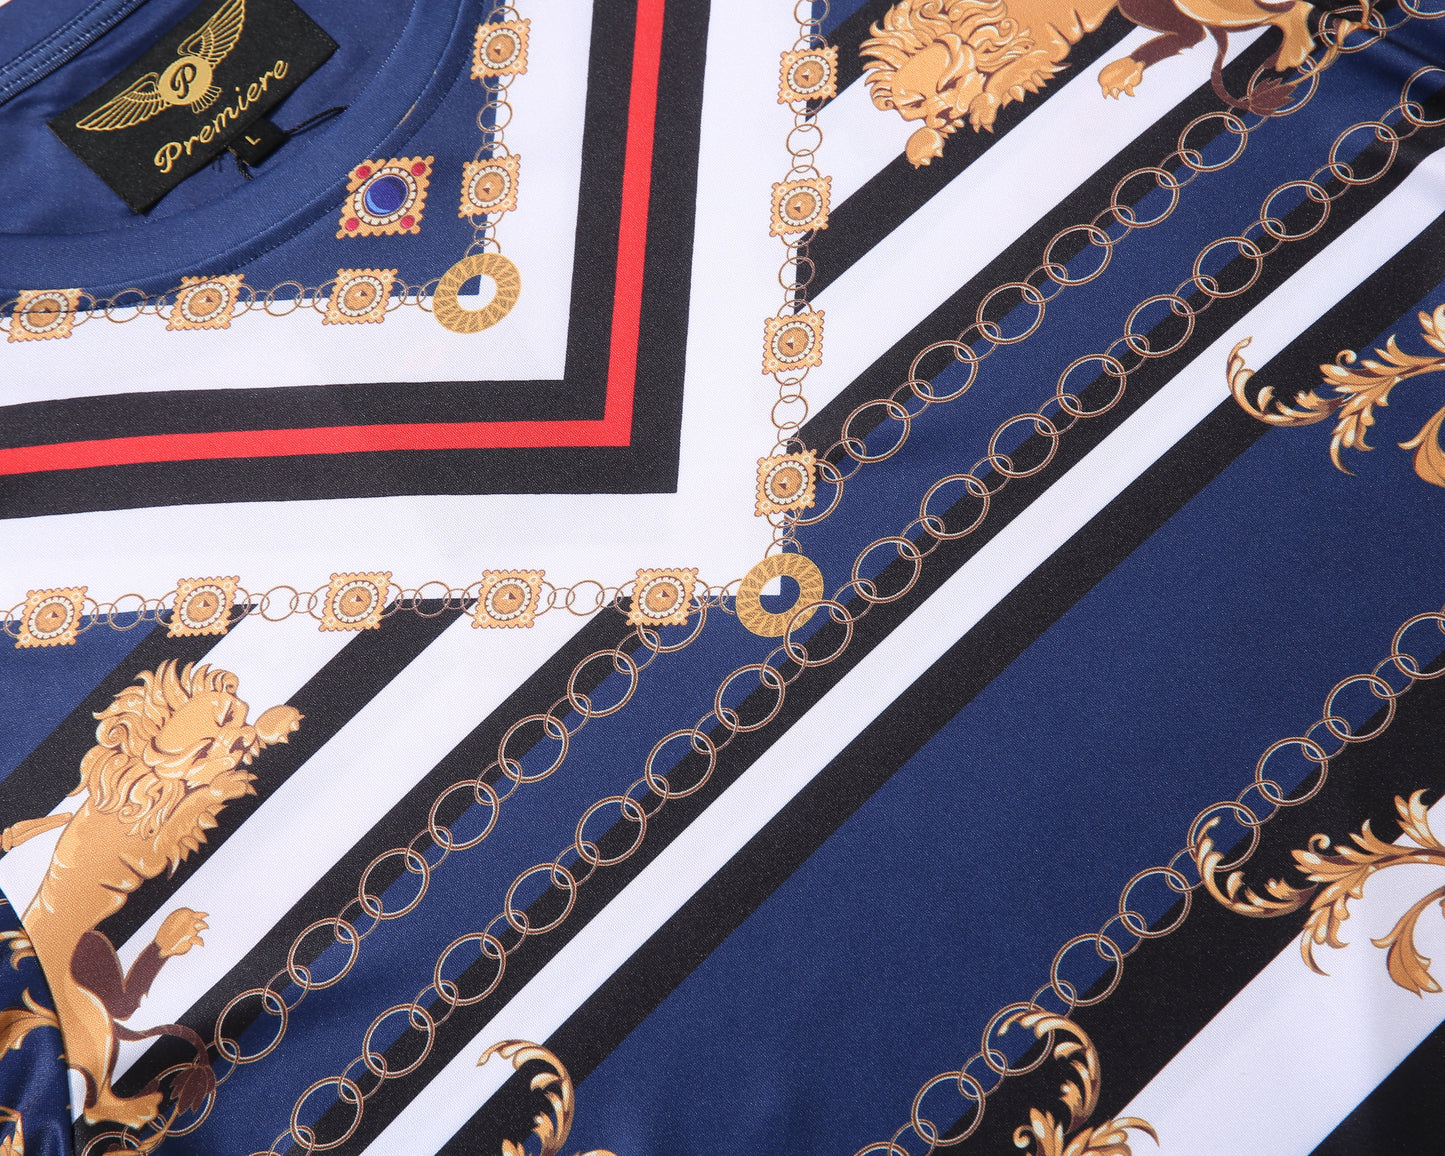 Men PREMIERE SLIM FIT Short Sleeve T SHIRT NAVY BLUE GOLD LION PRINT Designer Shirt